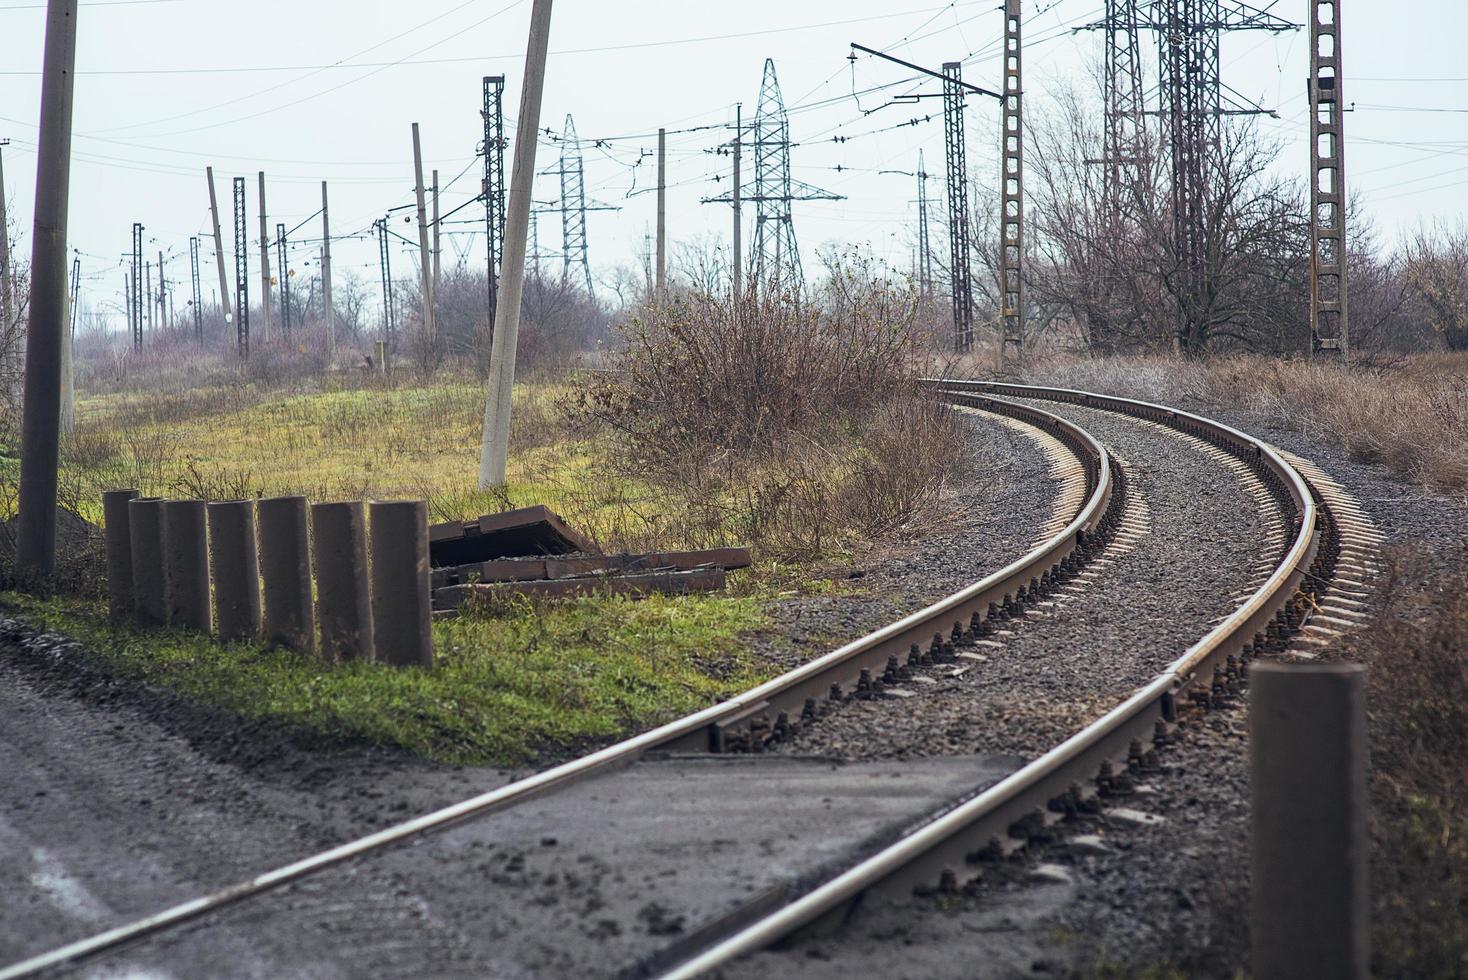 Railway tracks, rails, sleepers, train track. Railway track. Steel sleepers, curved shape. Turn by rail photo